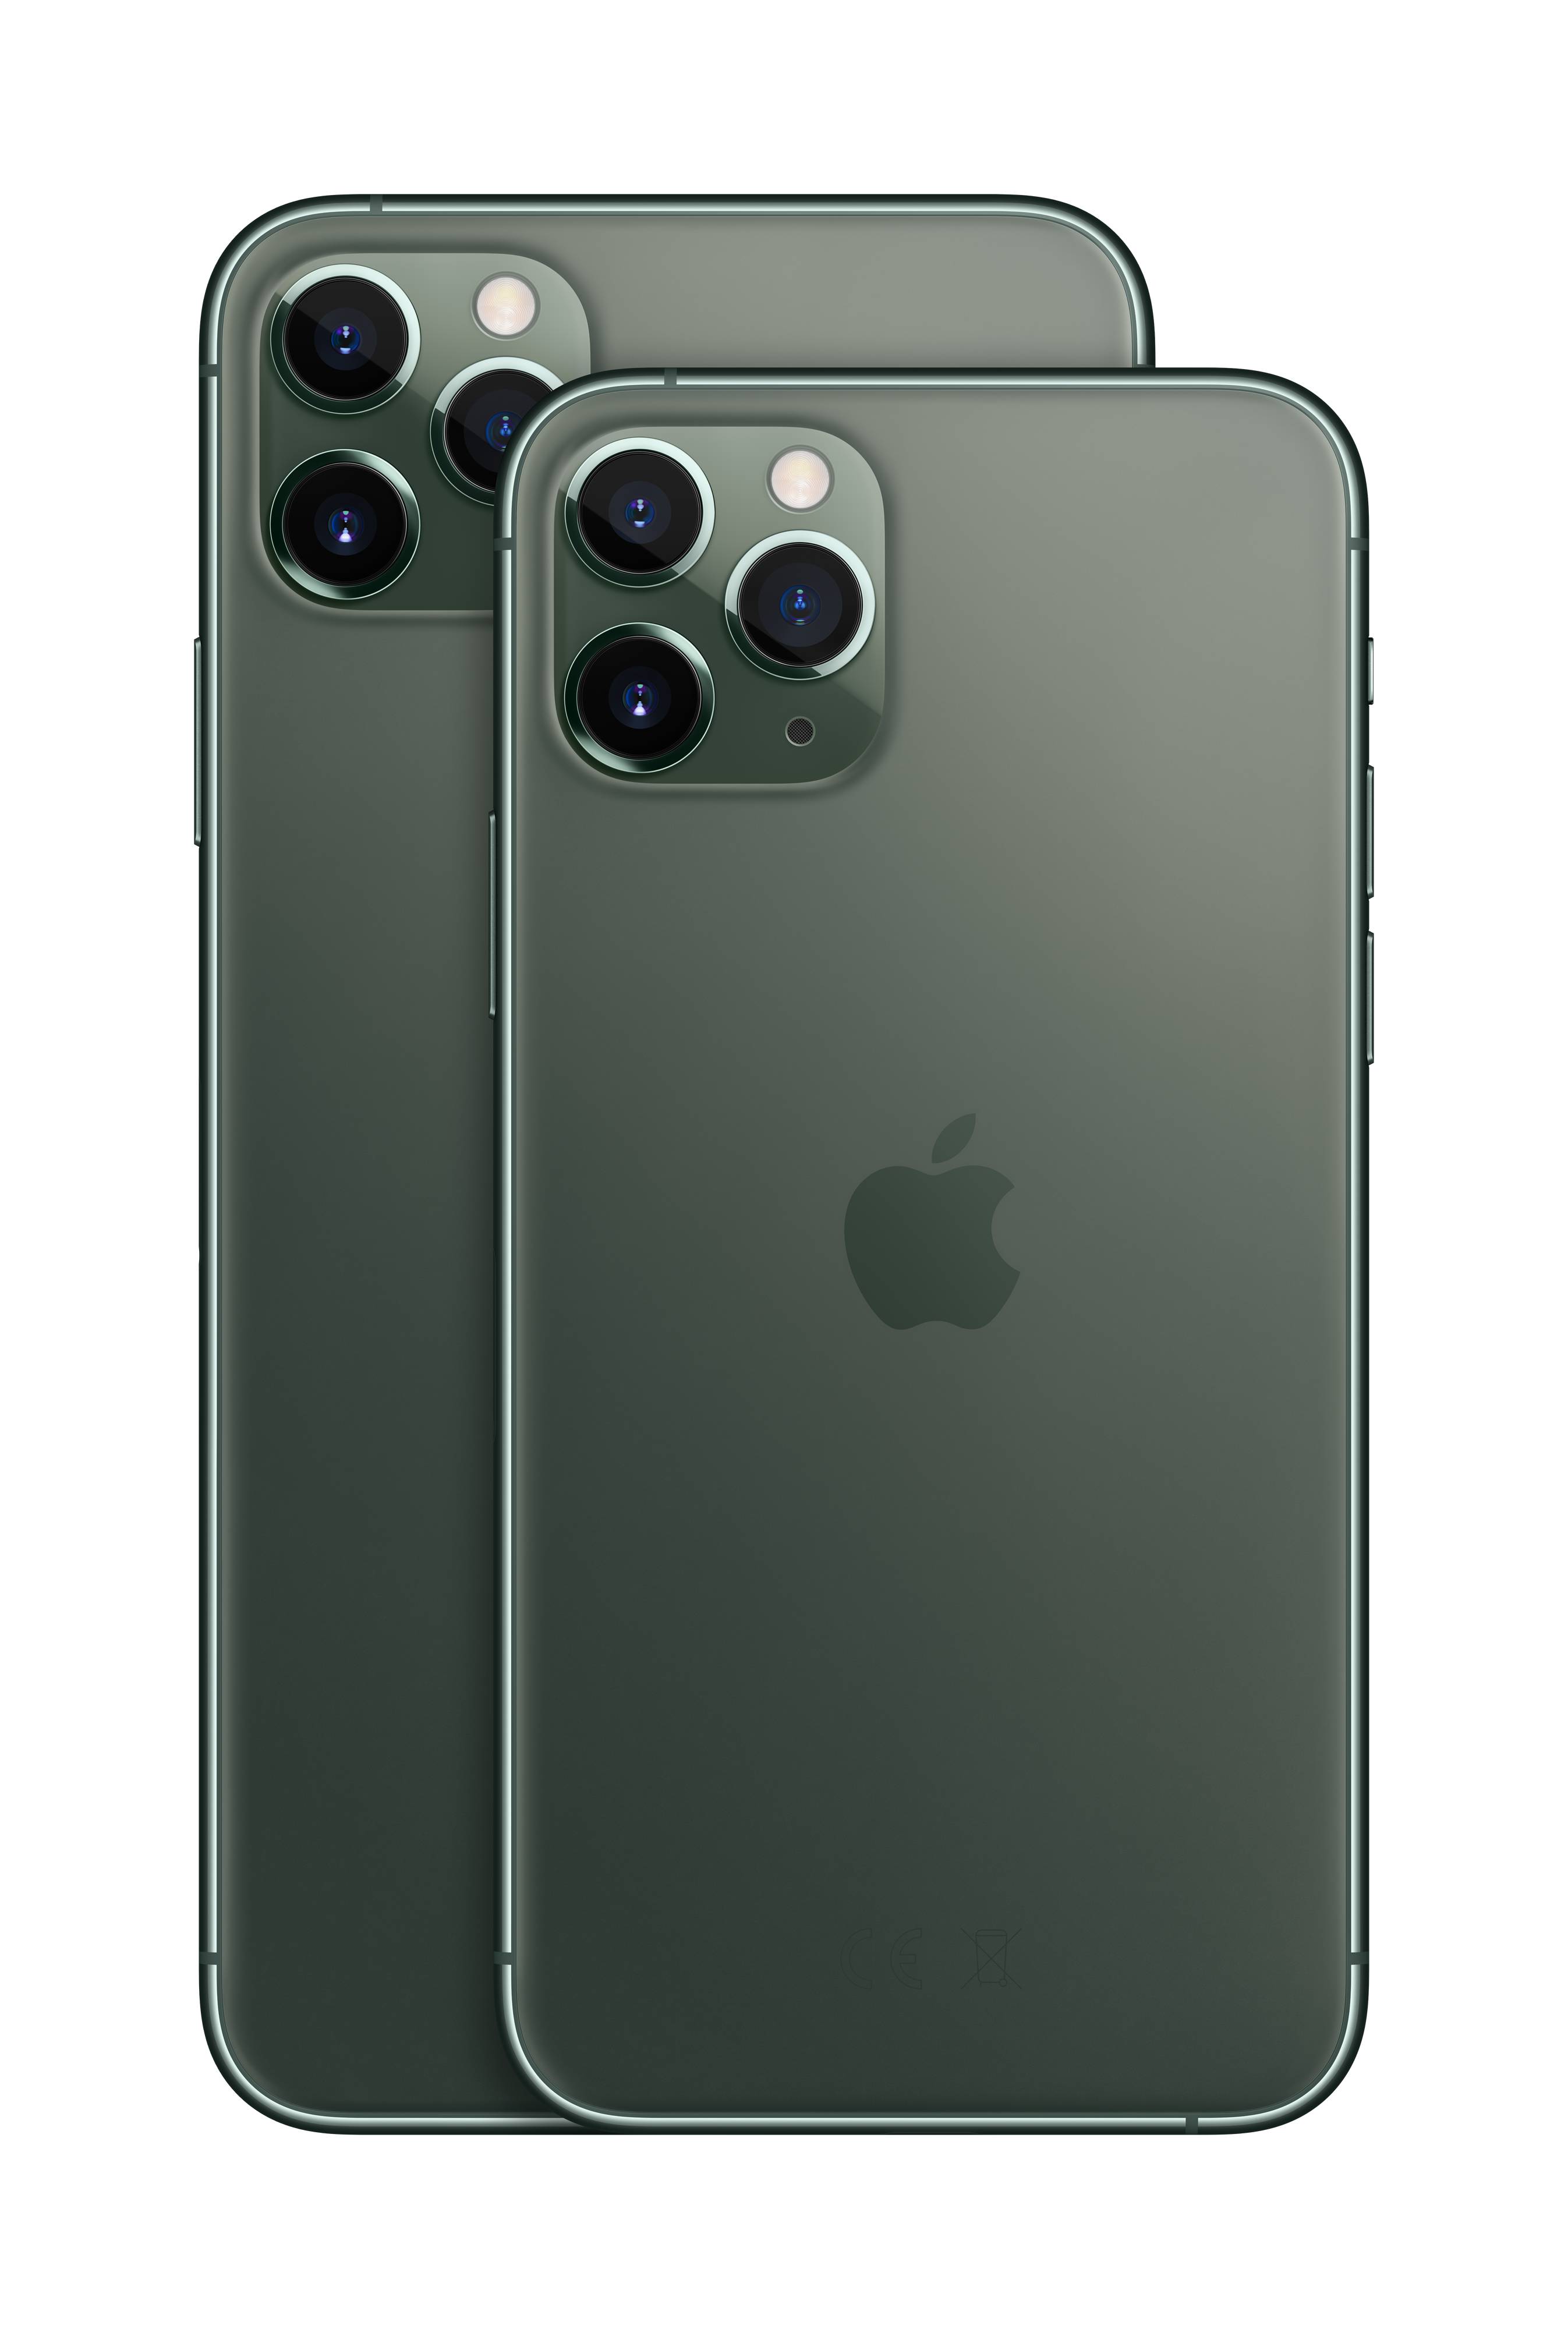 Apple Iphone 11 Pro Max Iphone 256 Gb 6 5 Inch 16 5 Cm Ios 13 Night Green Conrad Com